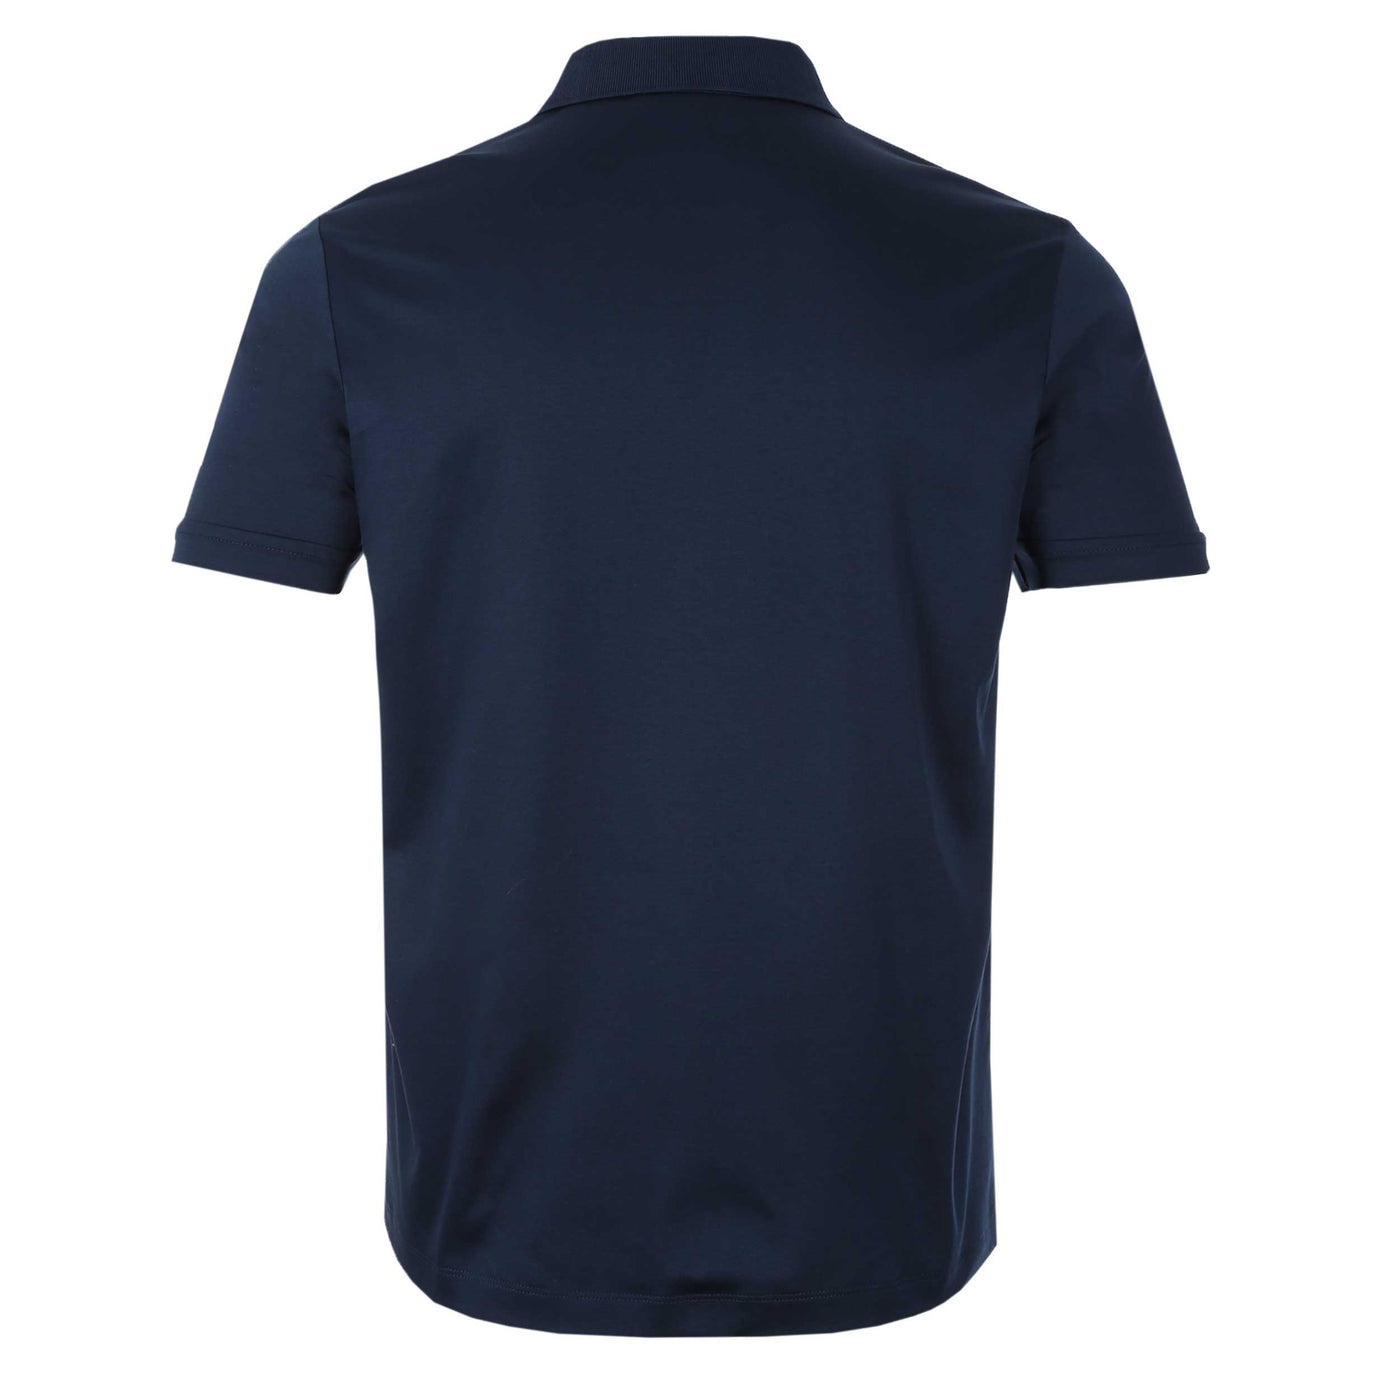 Sandbanks Interlock Full Button Polo Shirt in Navy Back